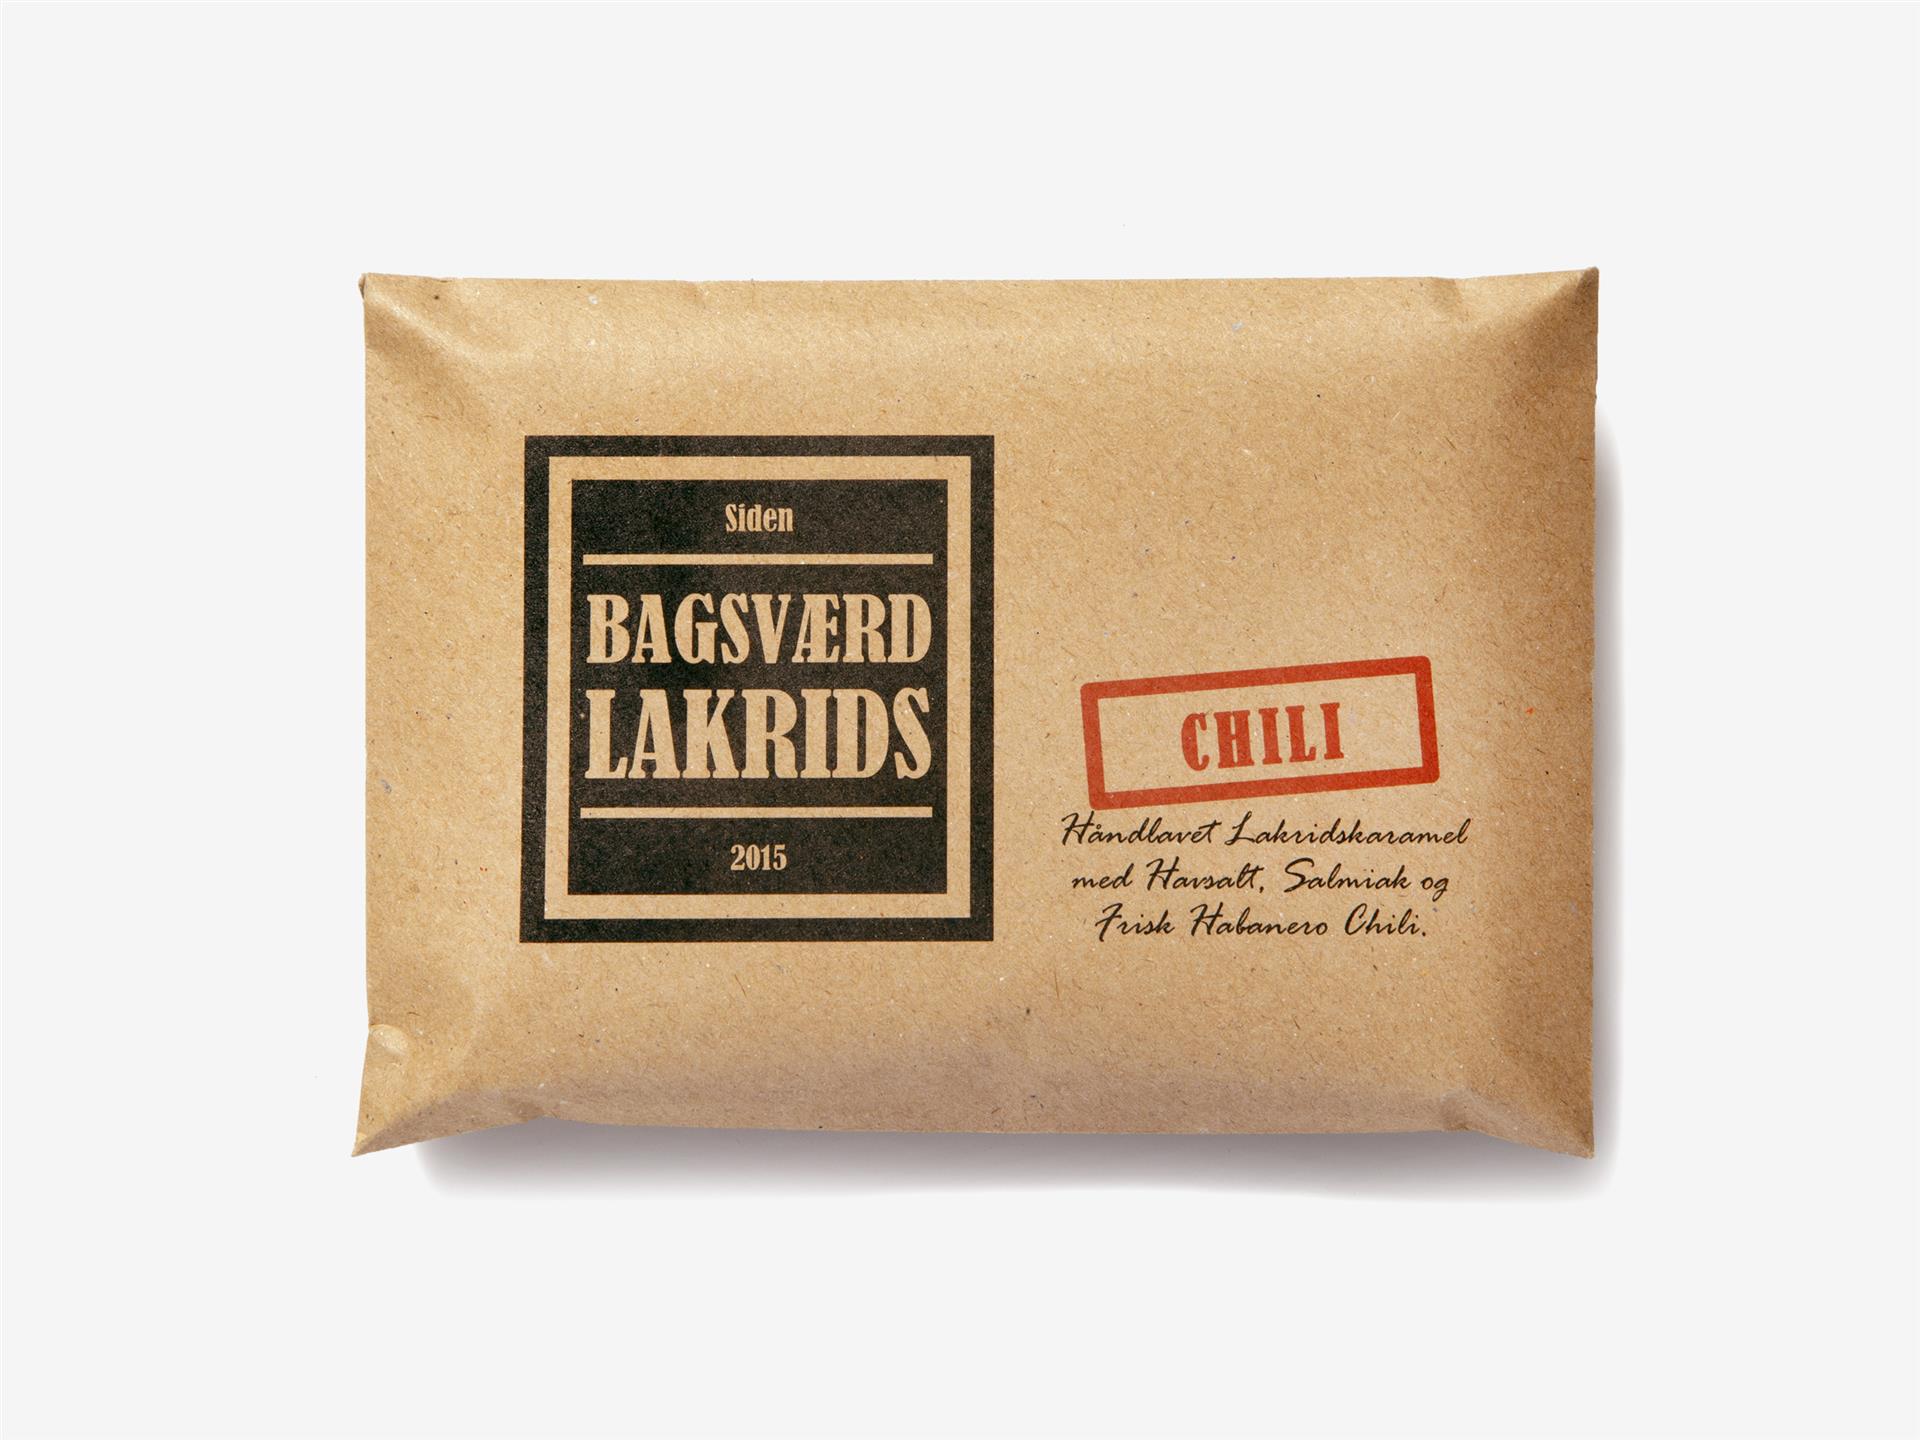 Bagsværd Lakrids Chilli 160 gram.